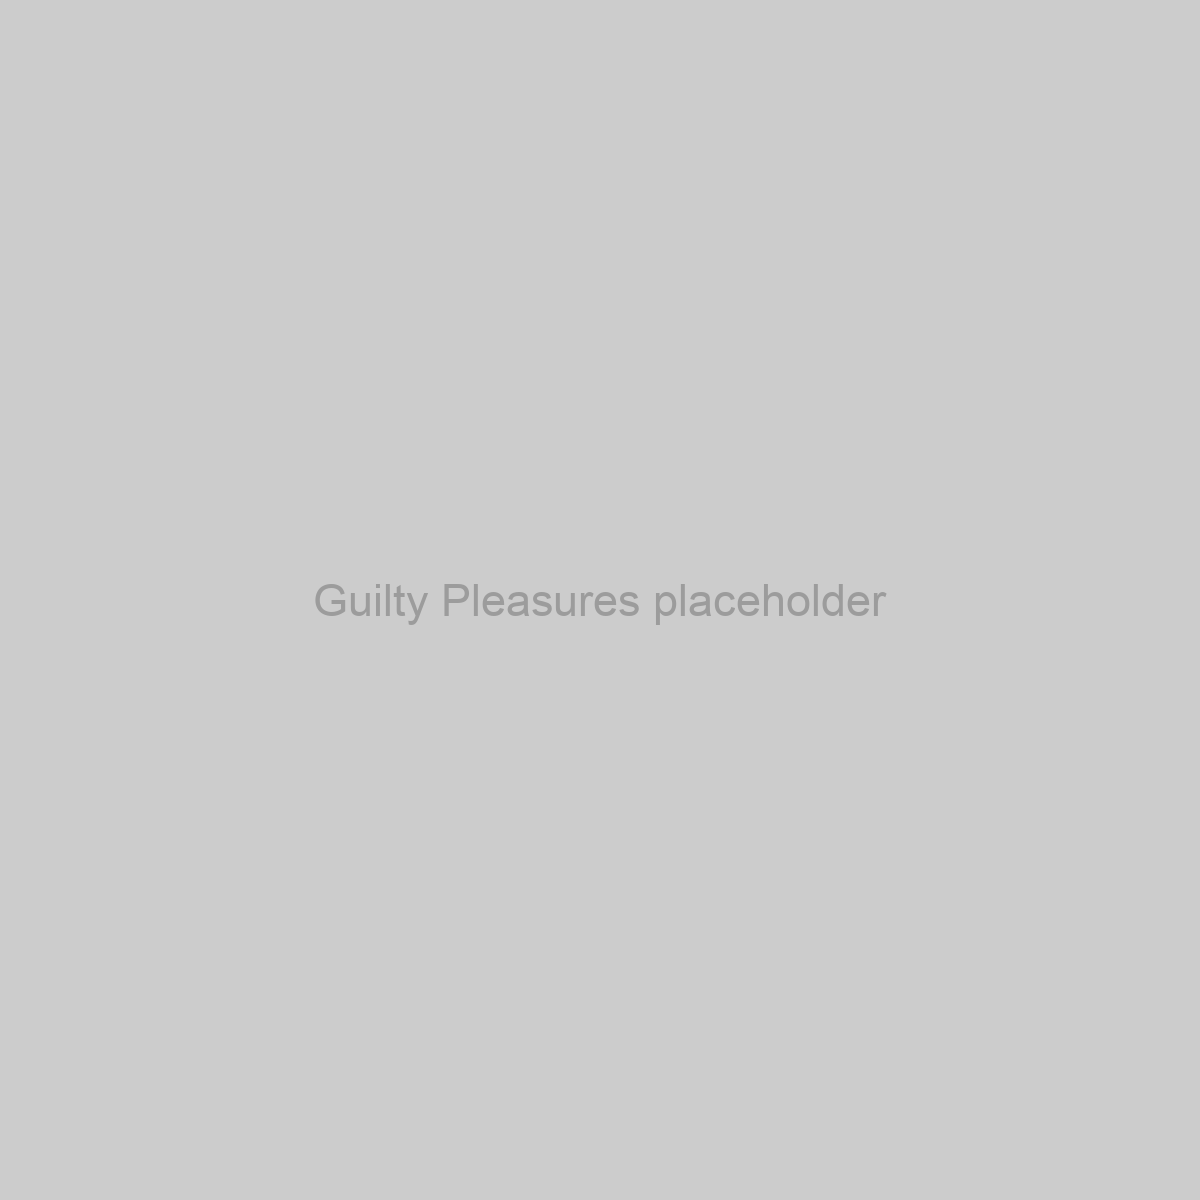 Guilty Pleasures Placeholder Image